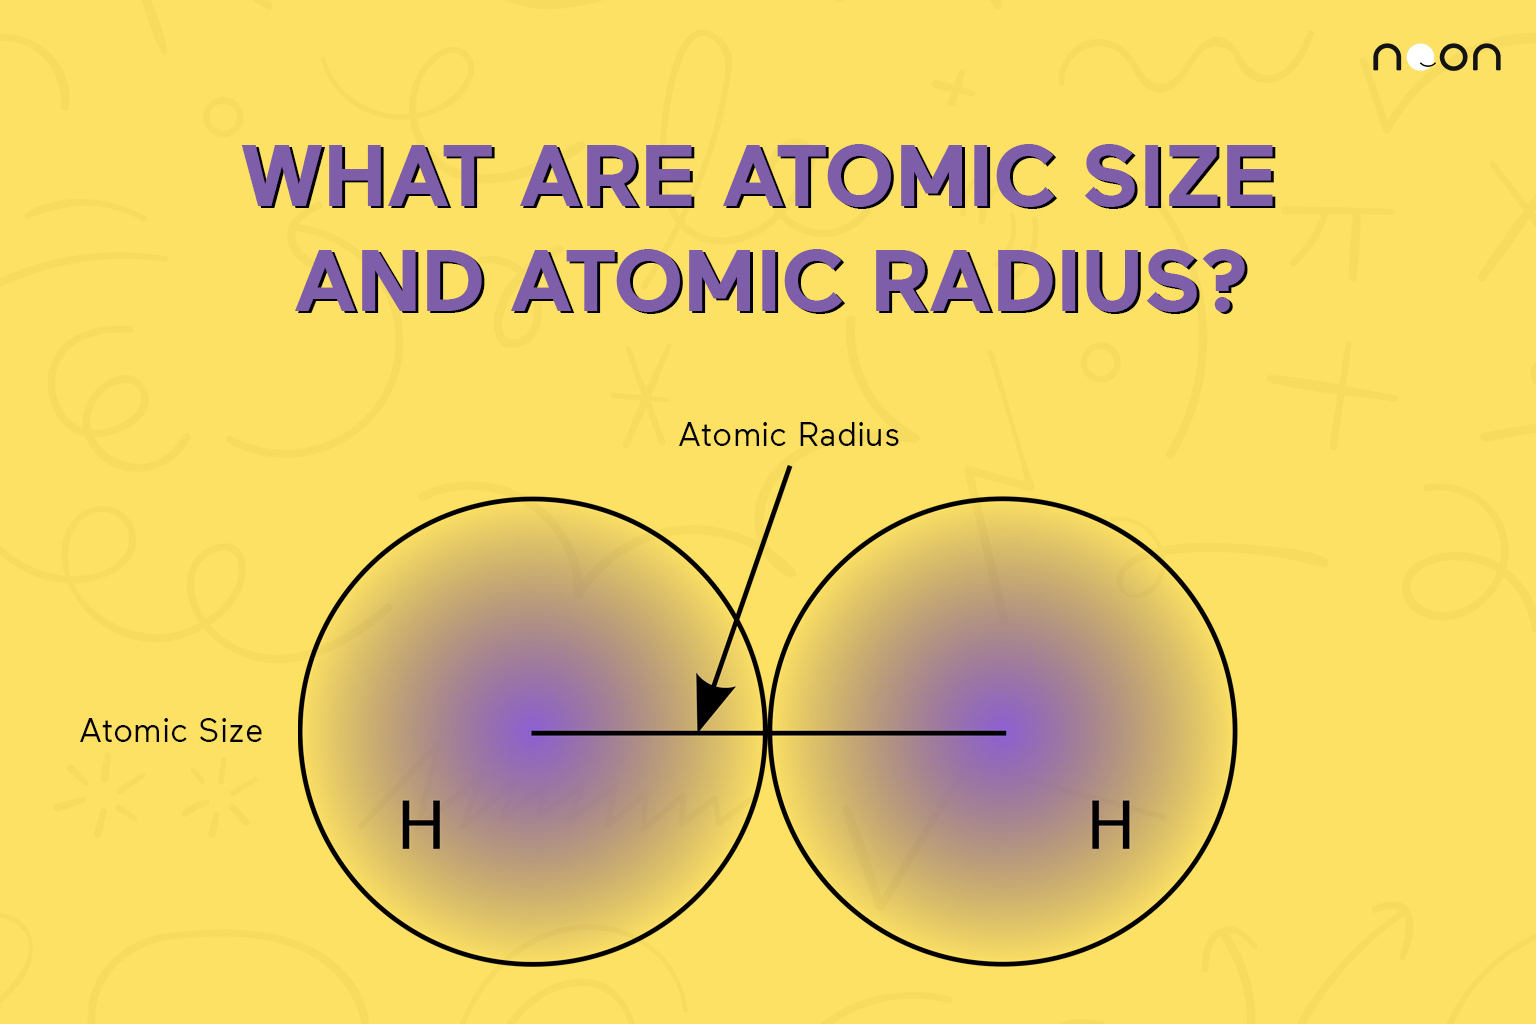 Atom radius & Size